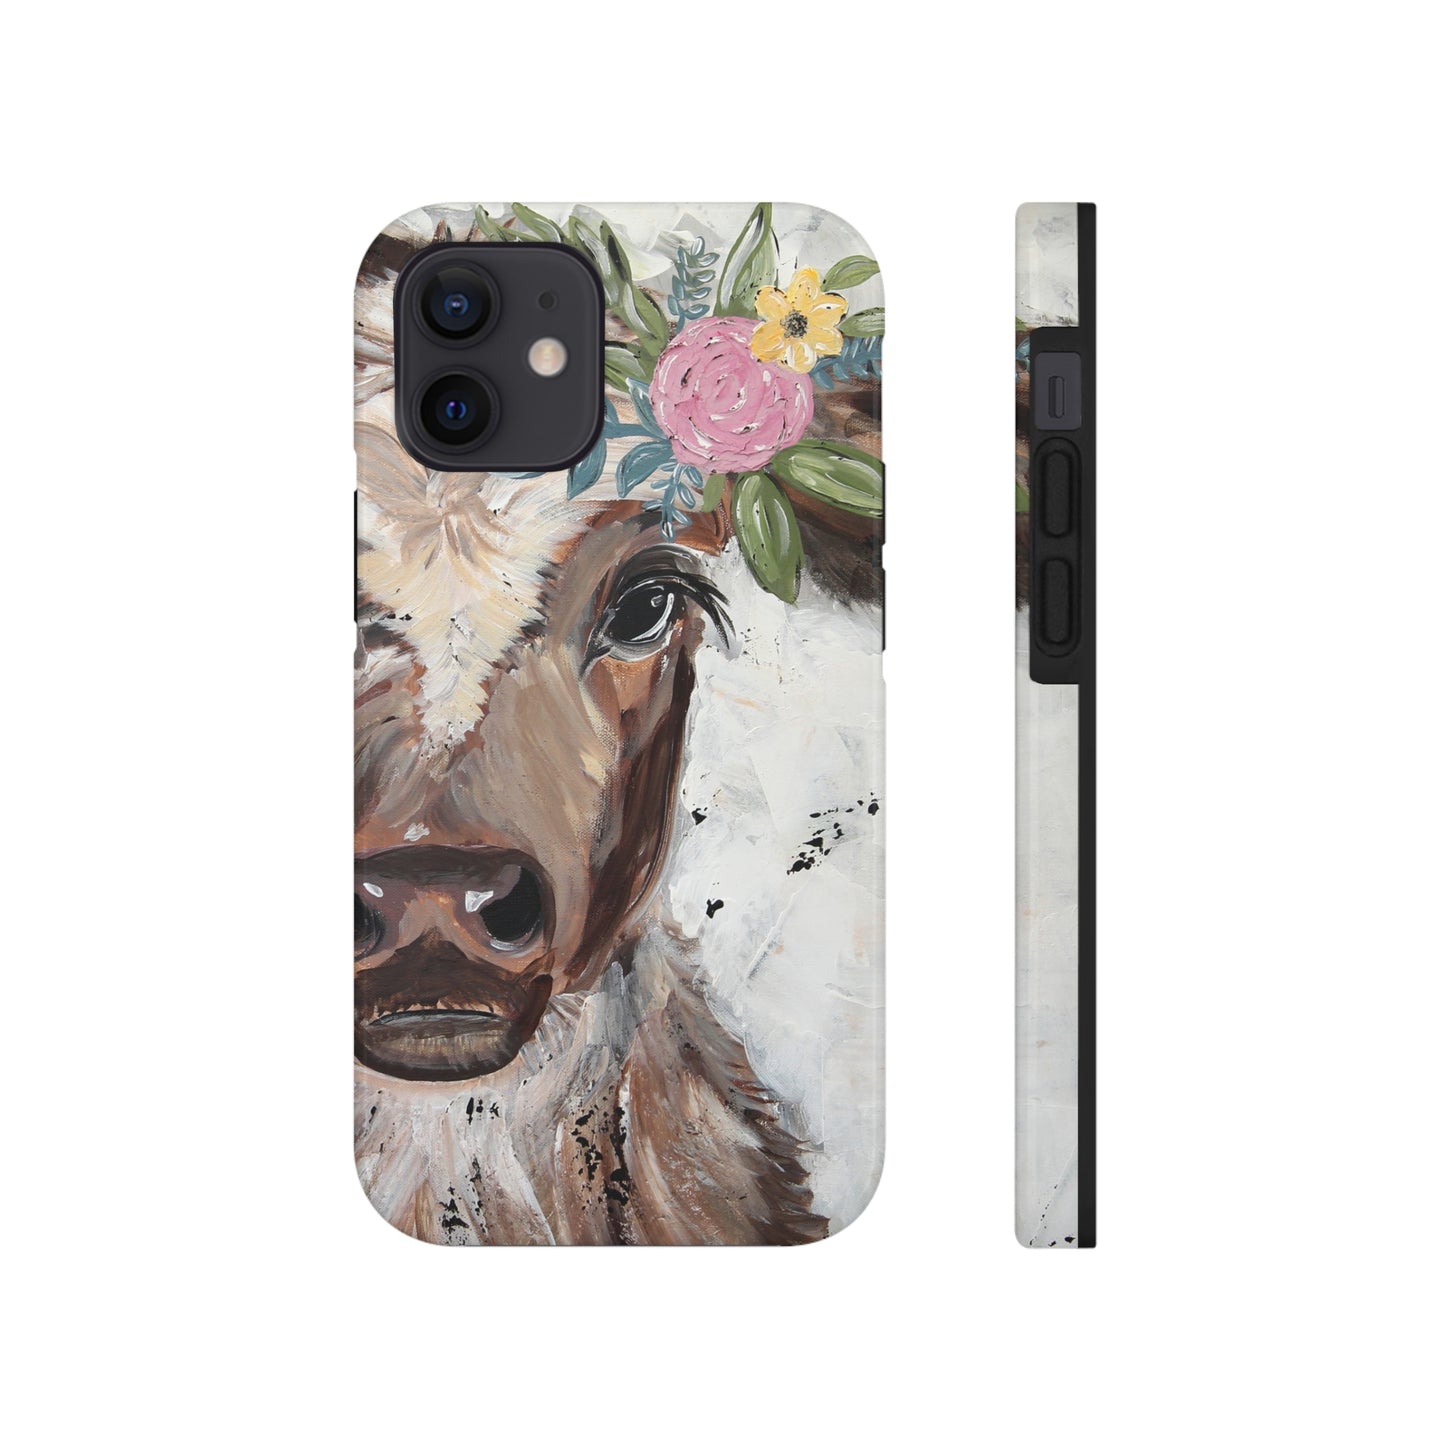 Cow Tough Phone Cases